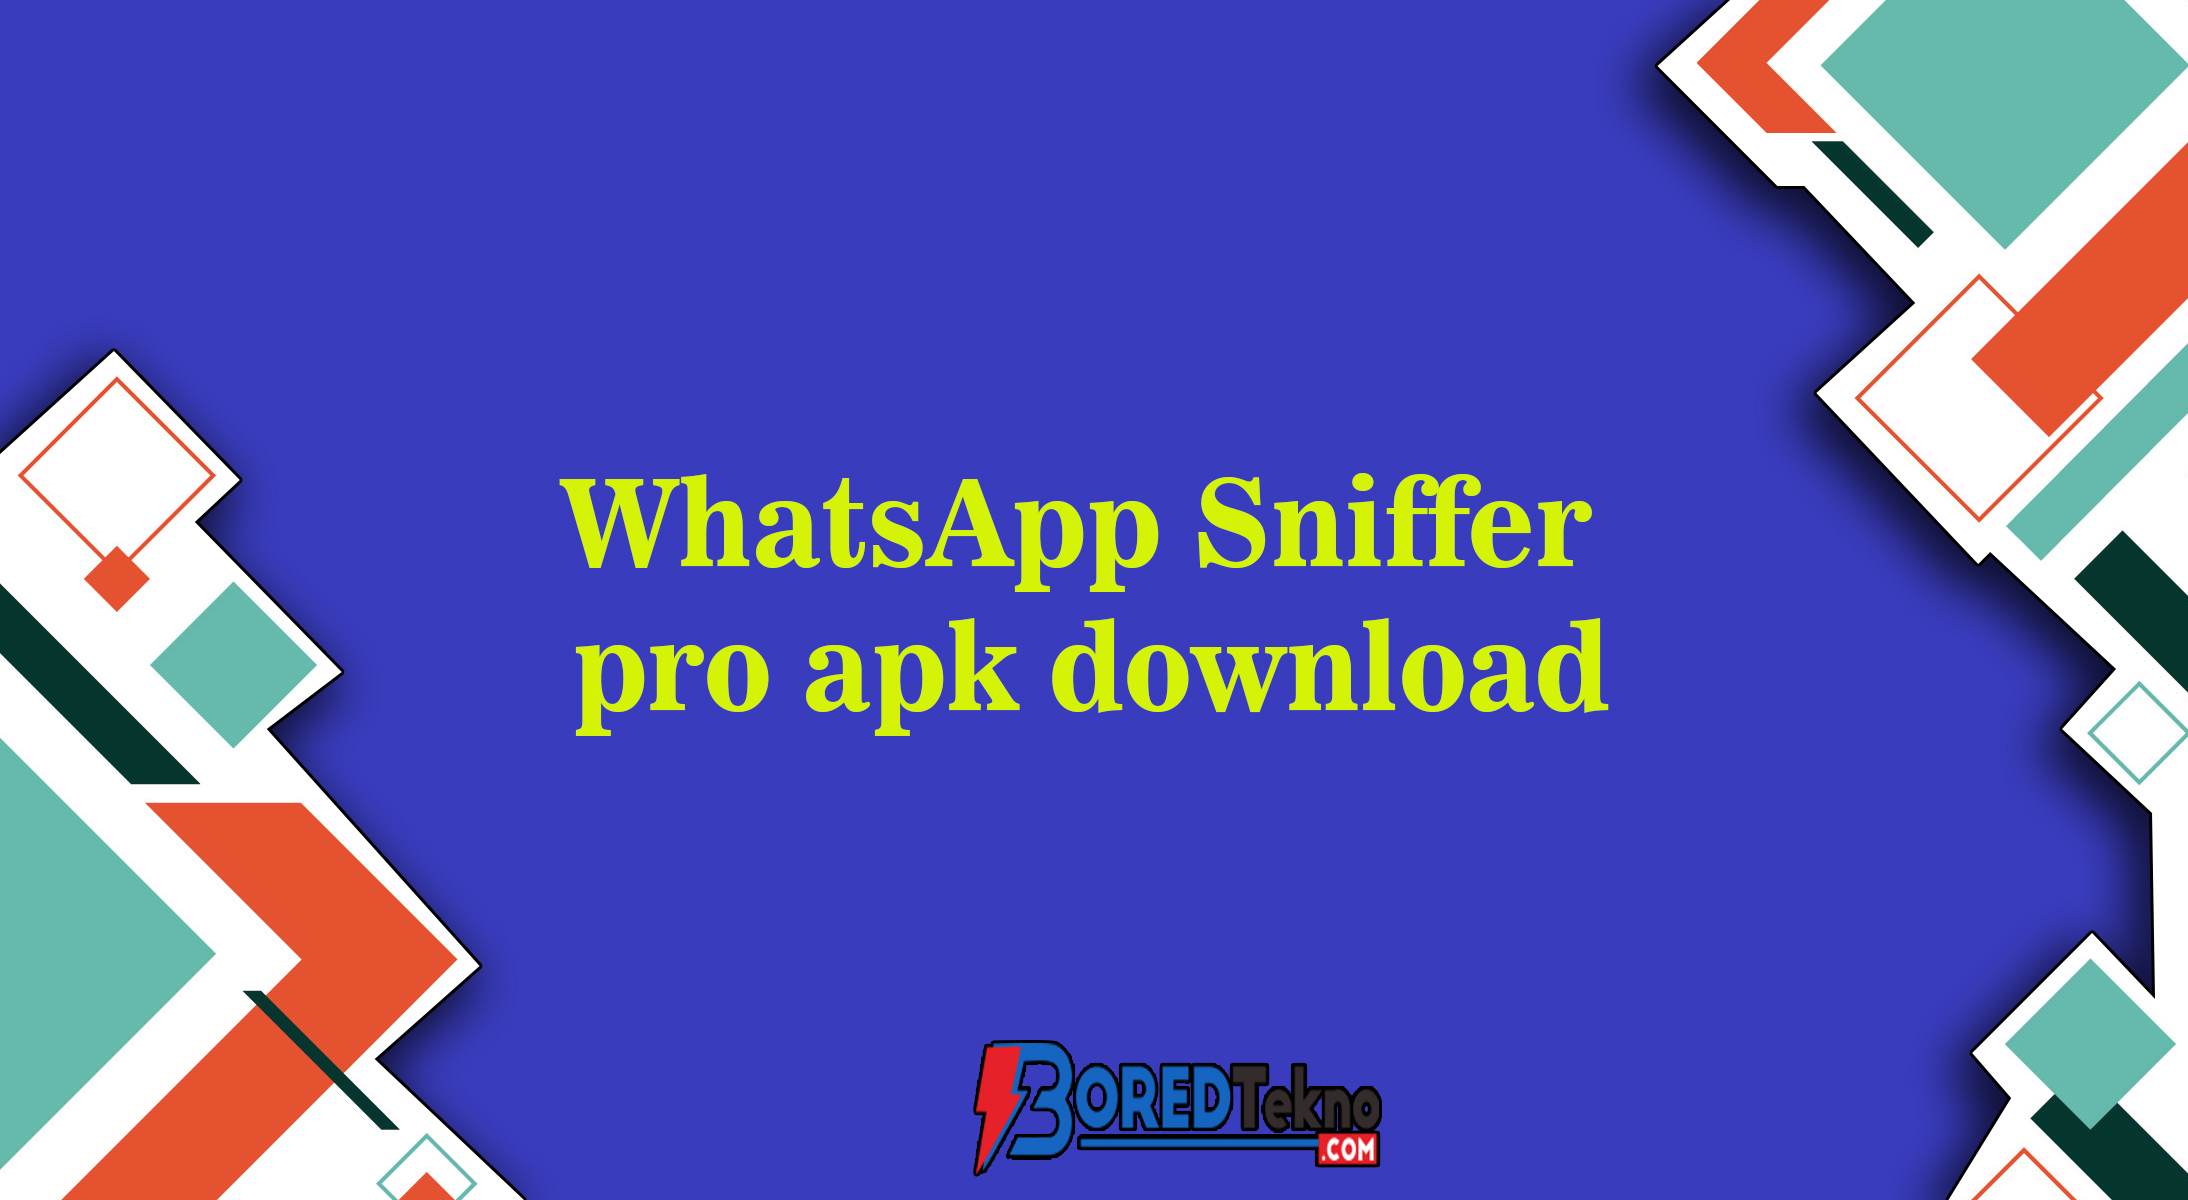 whatsapp sniffer v1.03 apk free download